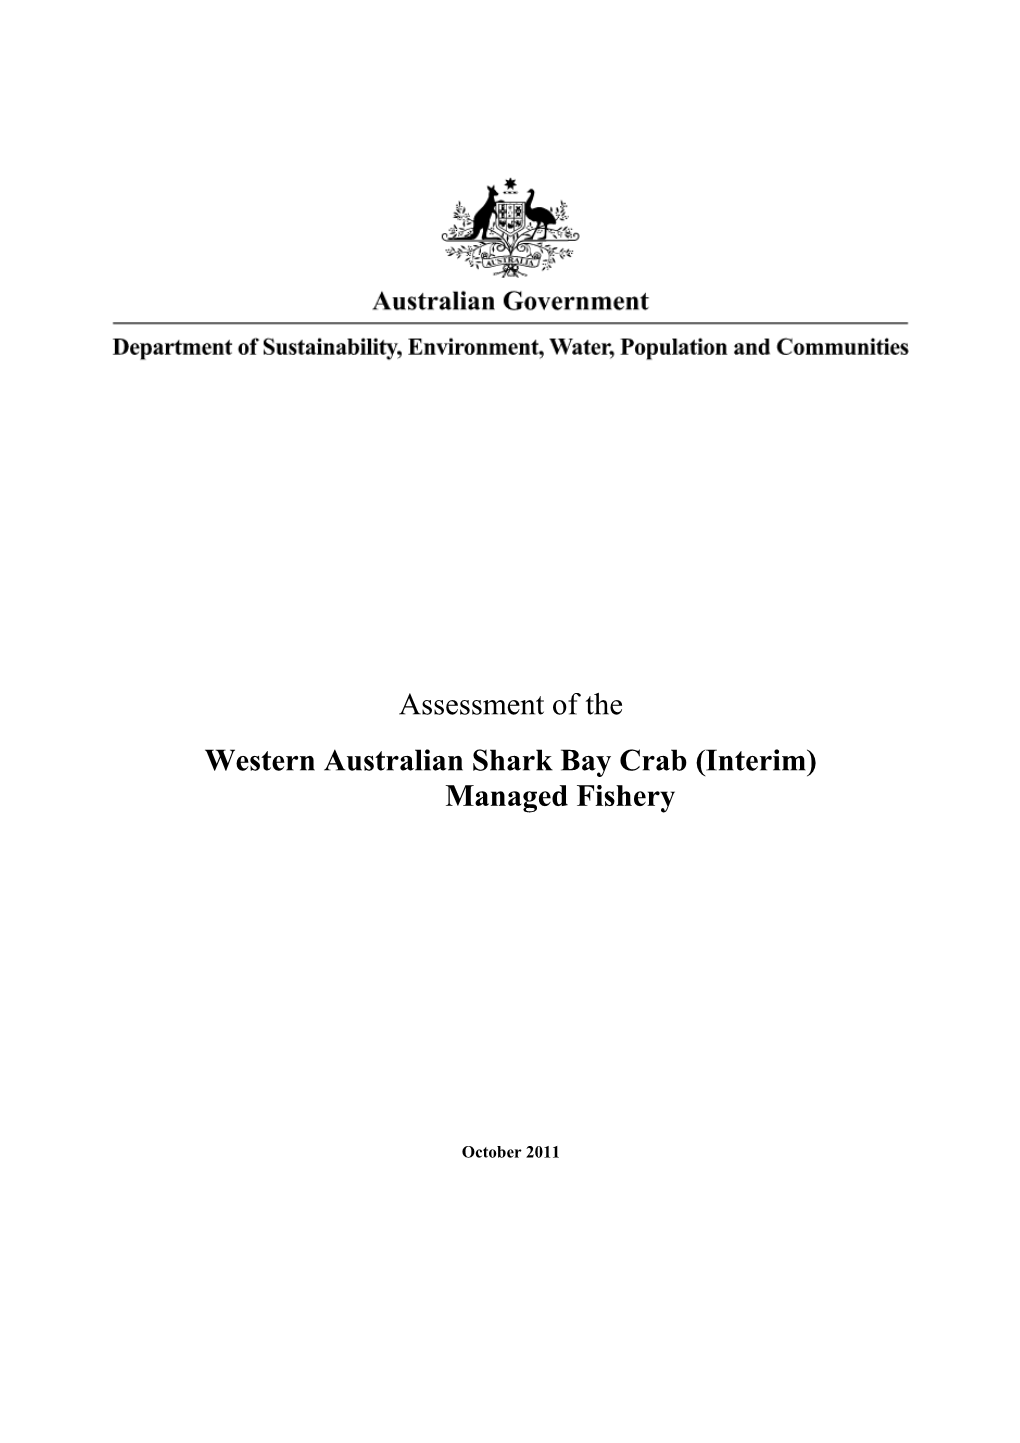 Assessment of the Western Australian Shark Bay Crab (Interim) Managed Fishery